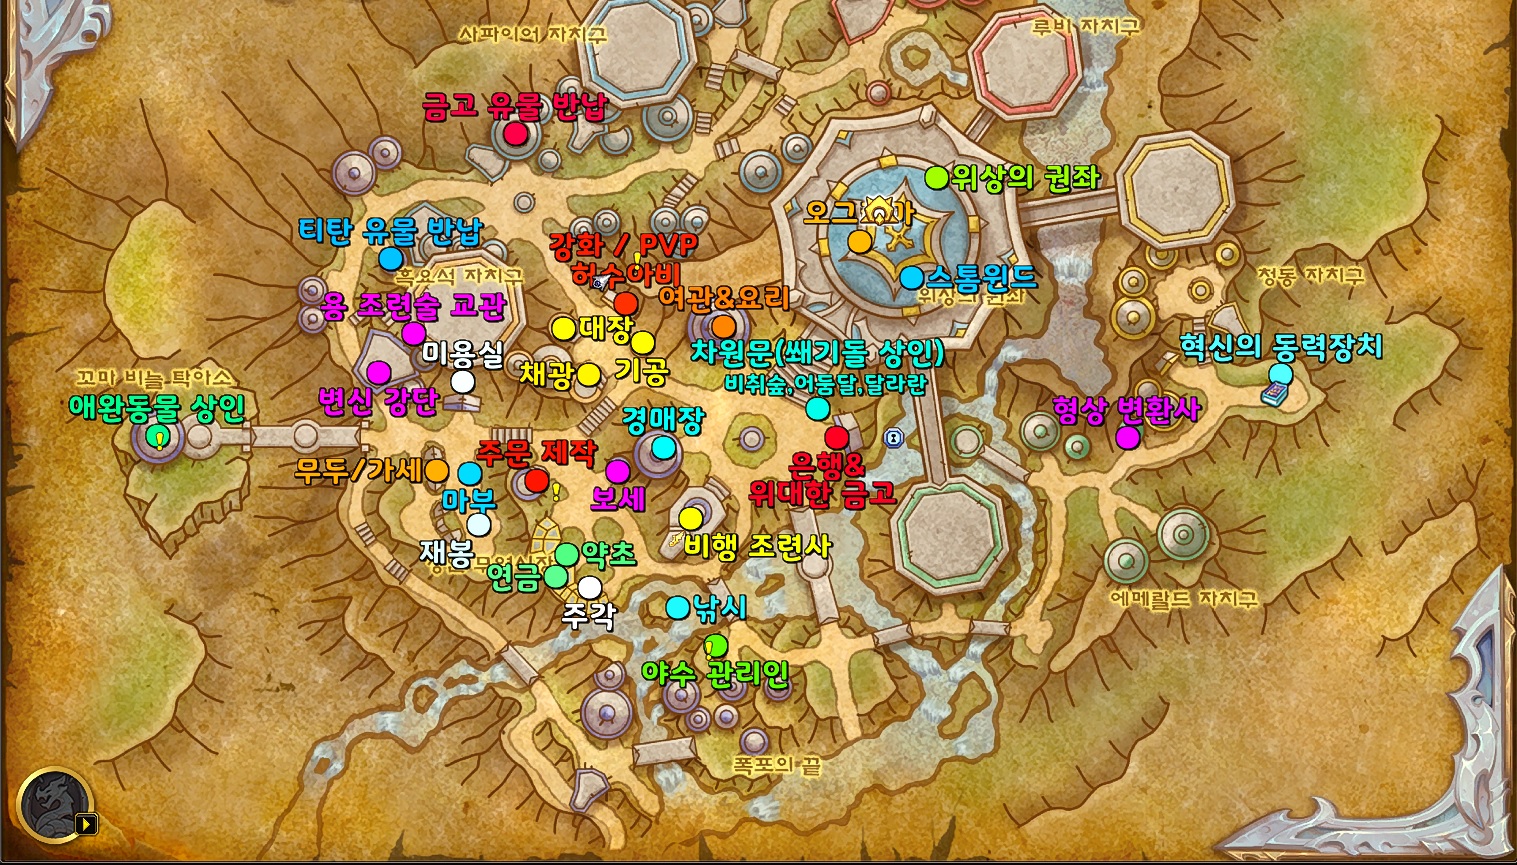 Valdrakken Npc Screenshots Weakaura World Of Warcraft